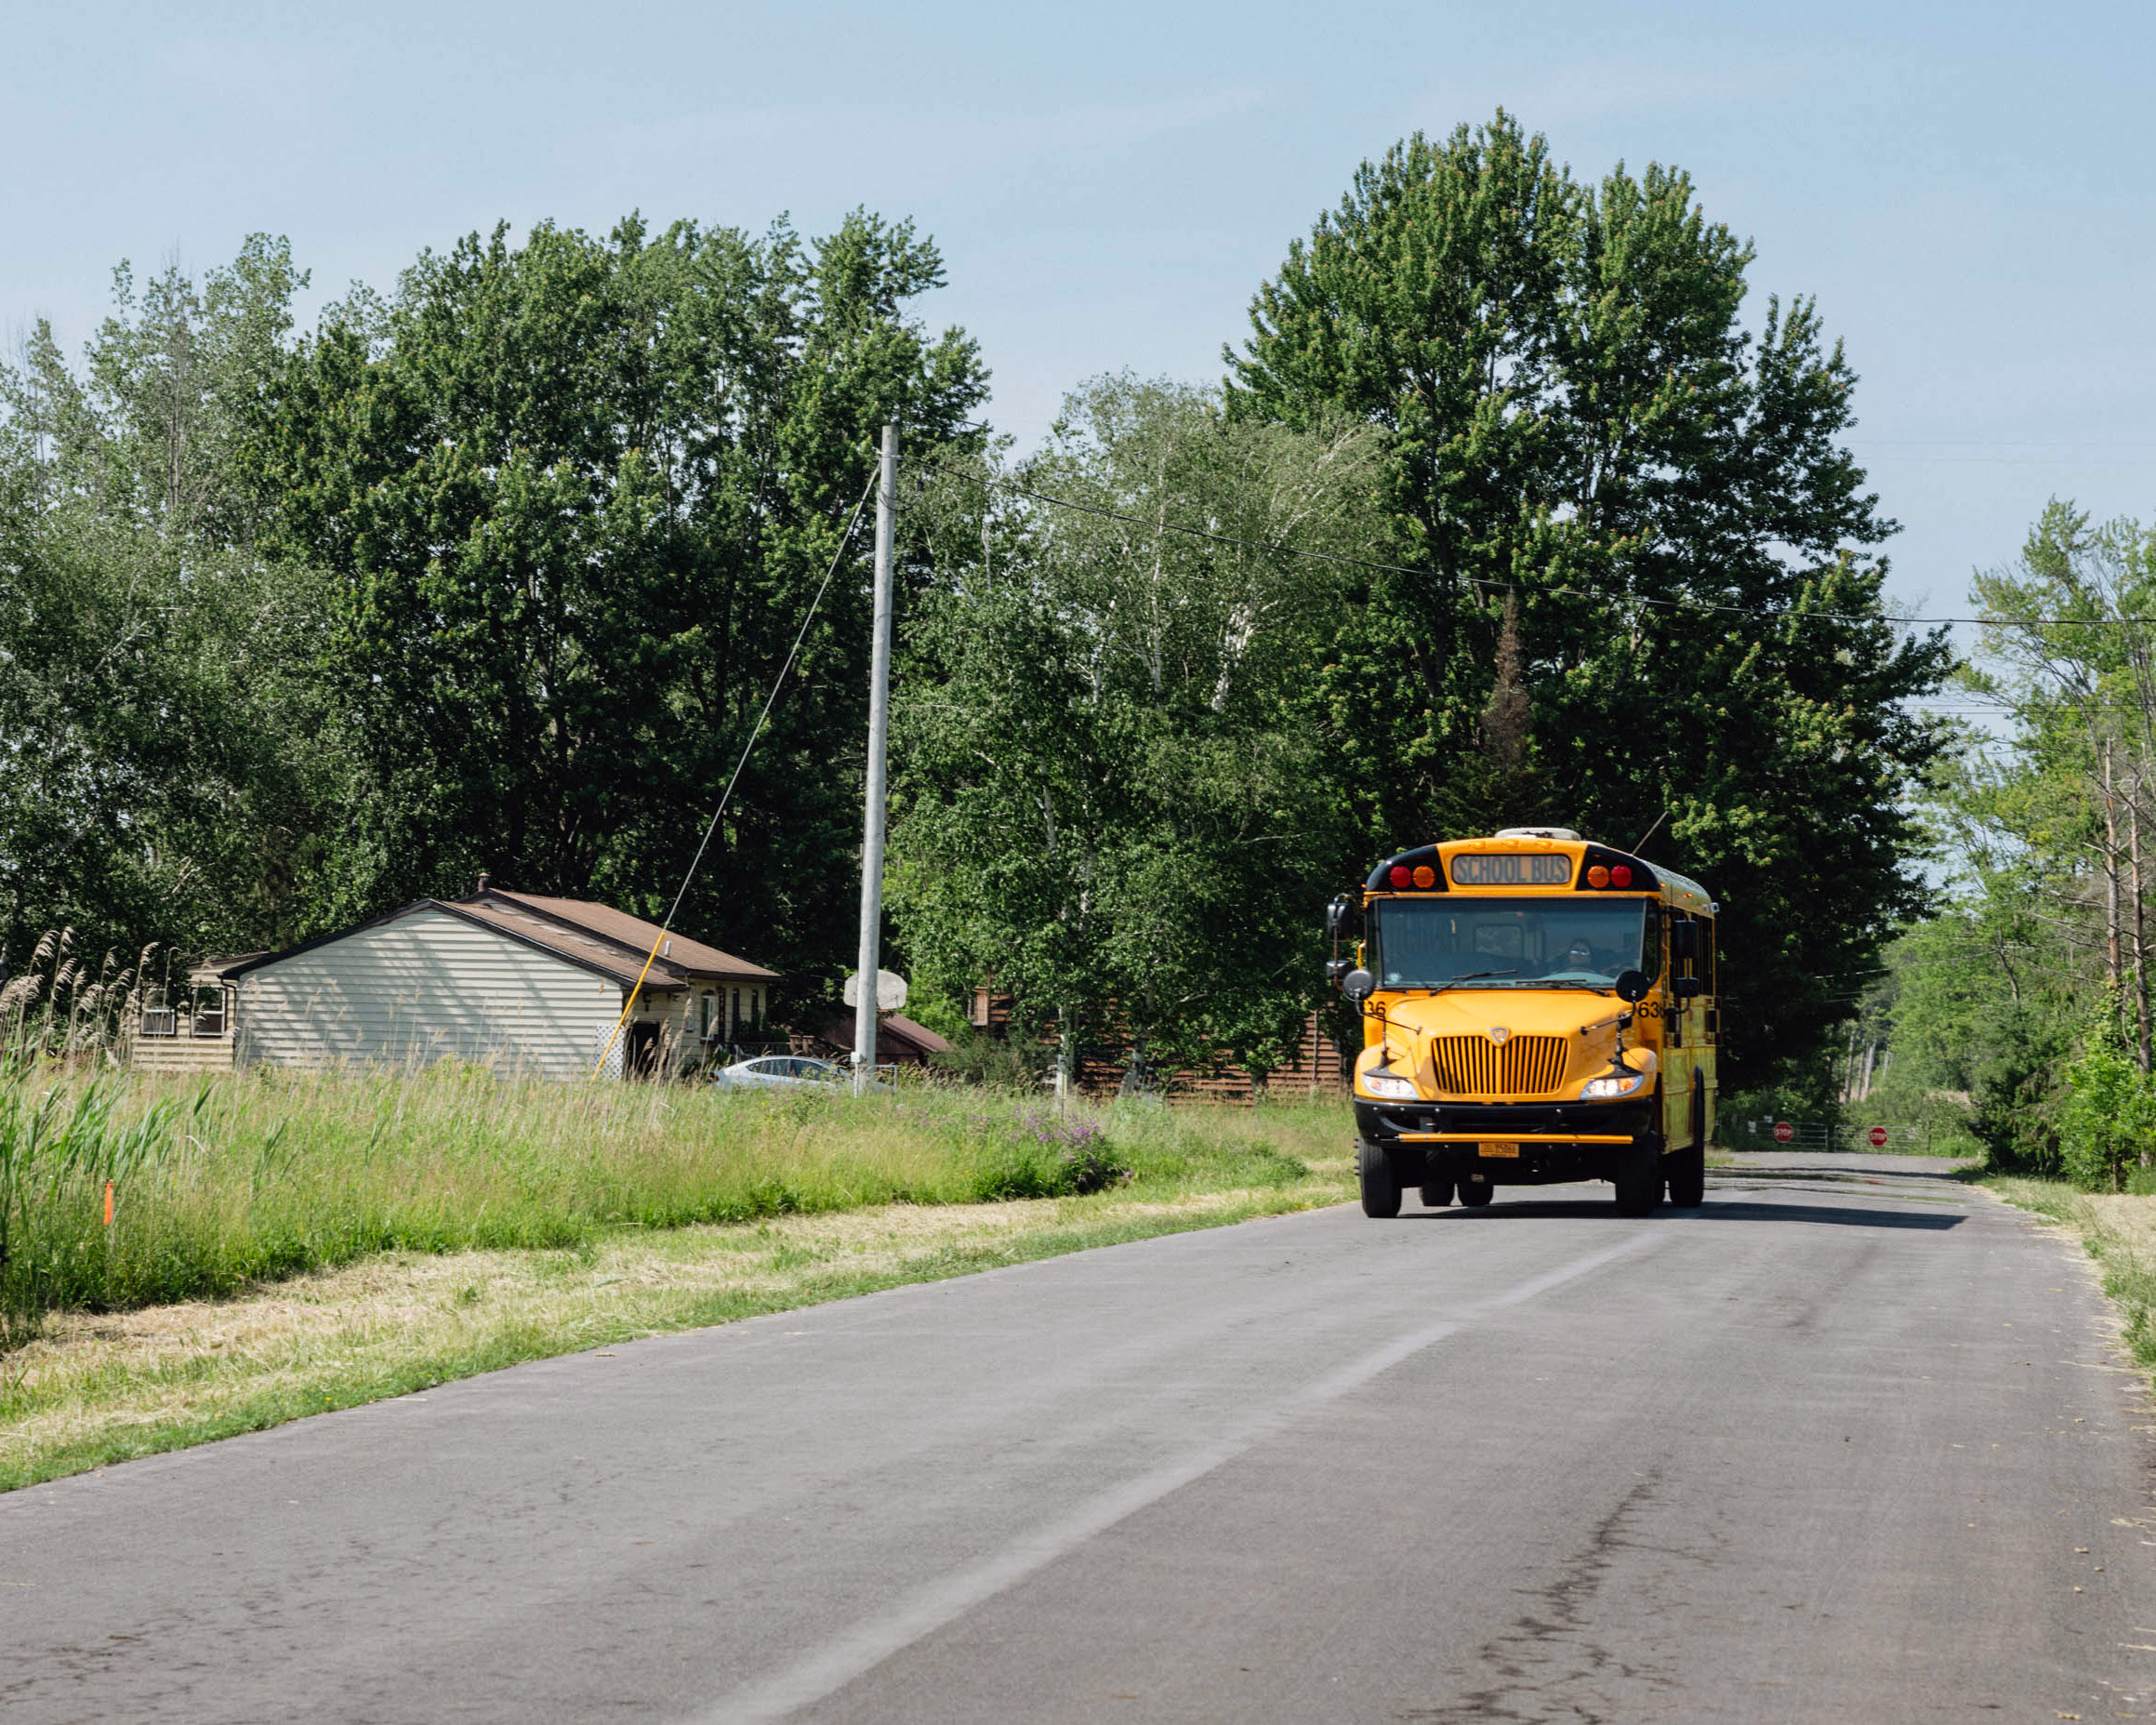 A school bus drives down a rural street in New York.